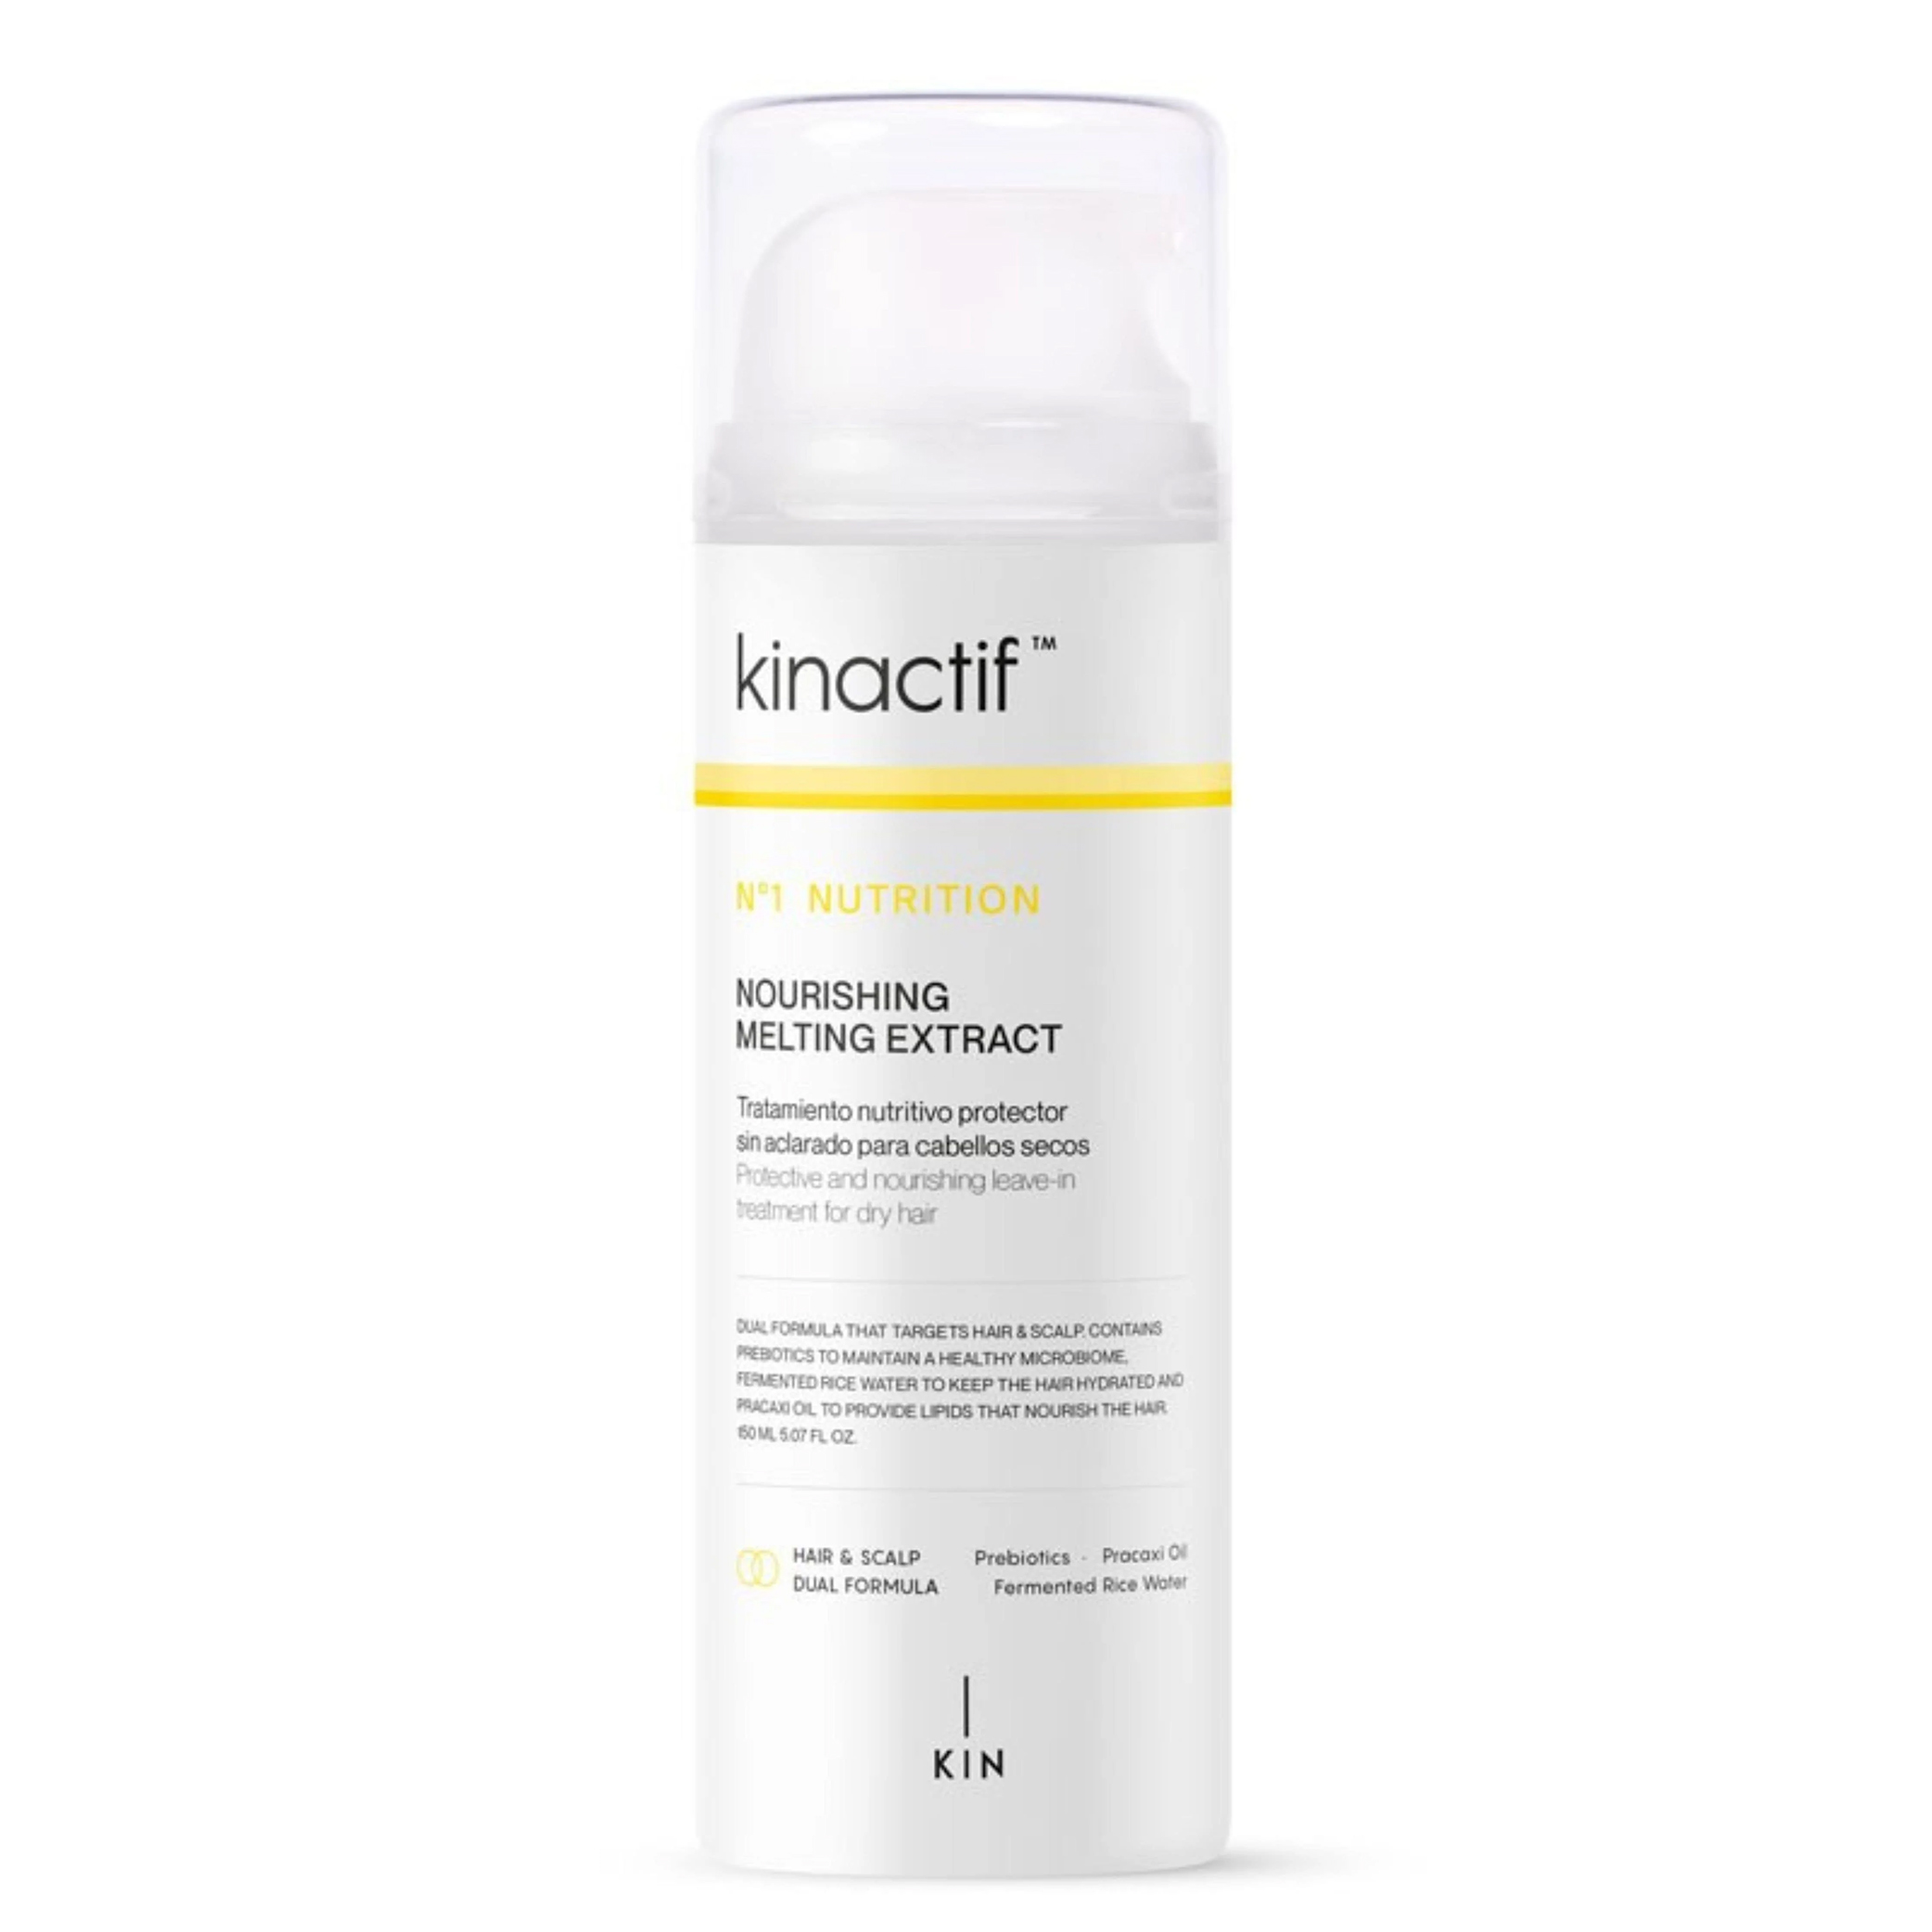 Kin - Kin Kinactif Nº1 Nutrition Nourishing Melting Extract 150 Ml. Tratamiento nutritivo protector sin aclarado para cabellos secos.